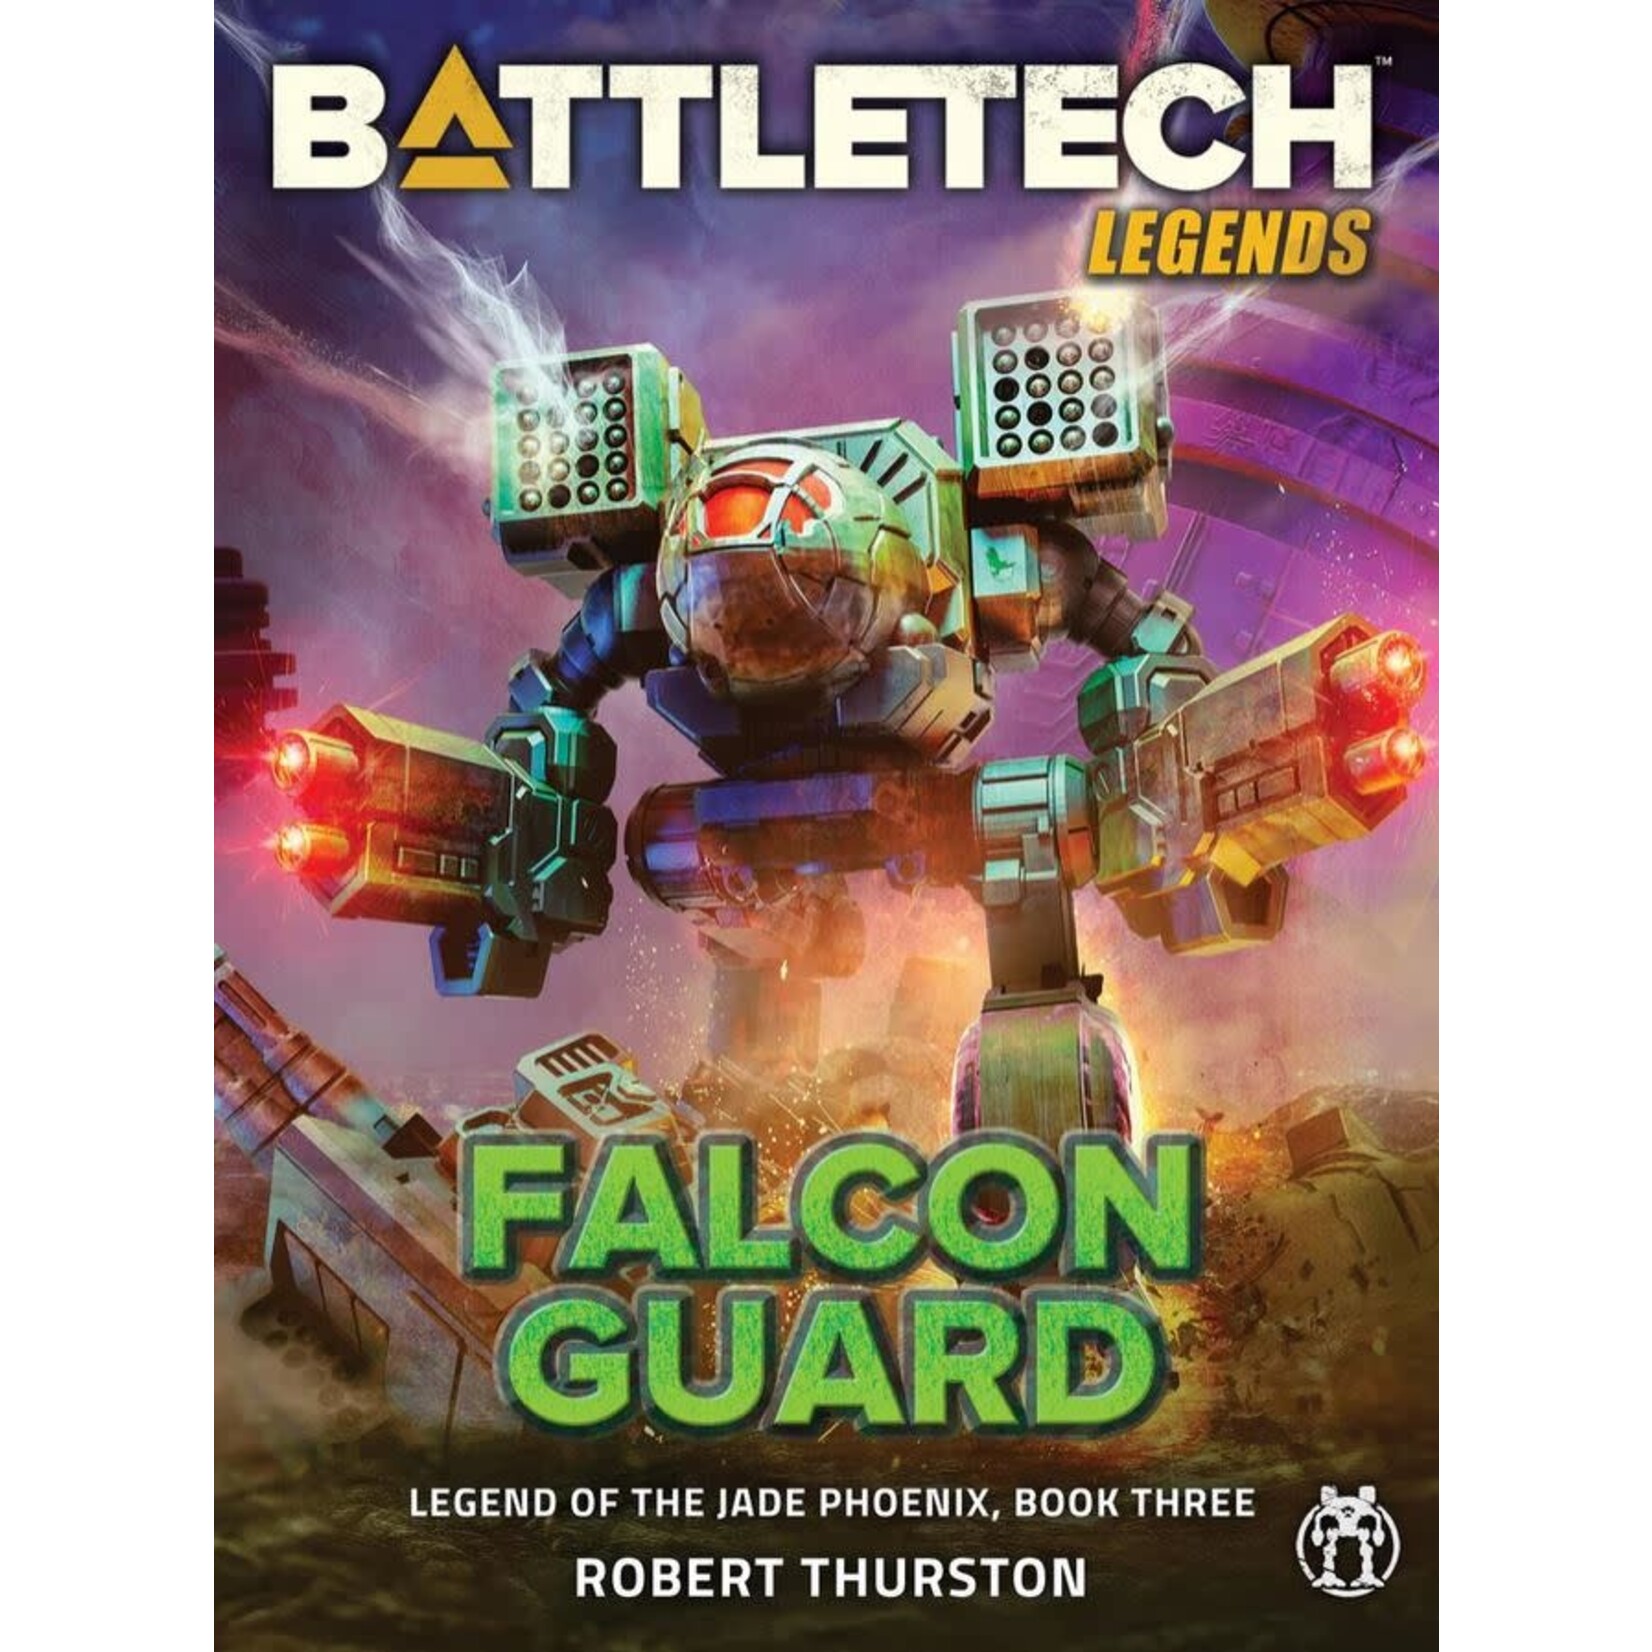 BattleTech: Legend of the Jade Phoenix - Book Three - Falcon Guard Hardcover (Preorder)